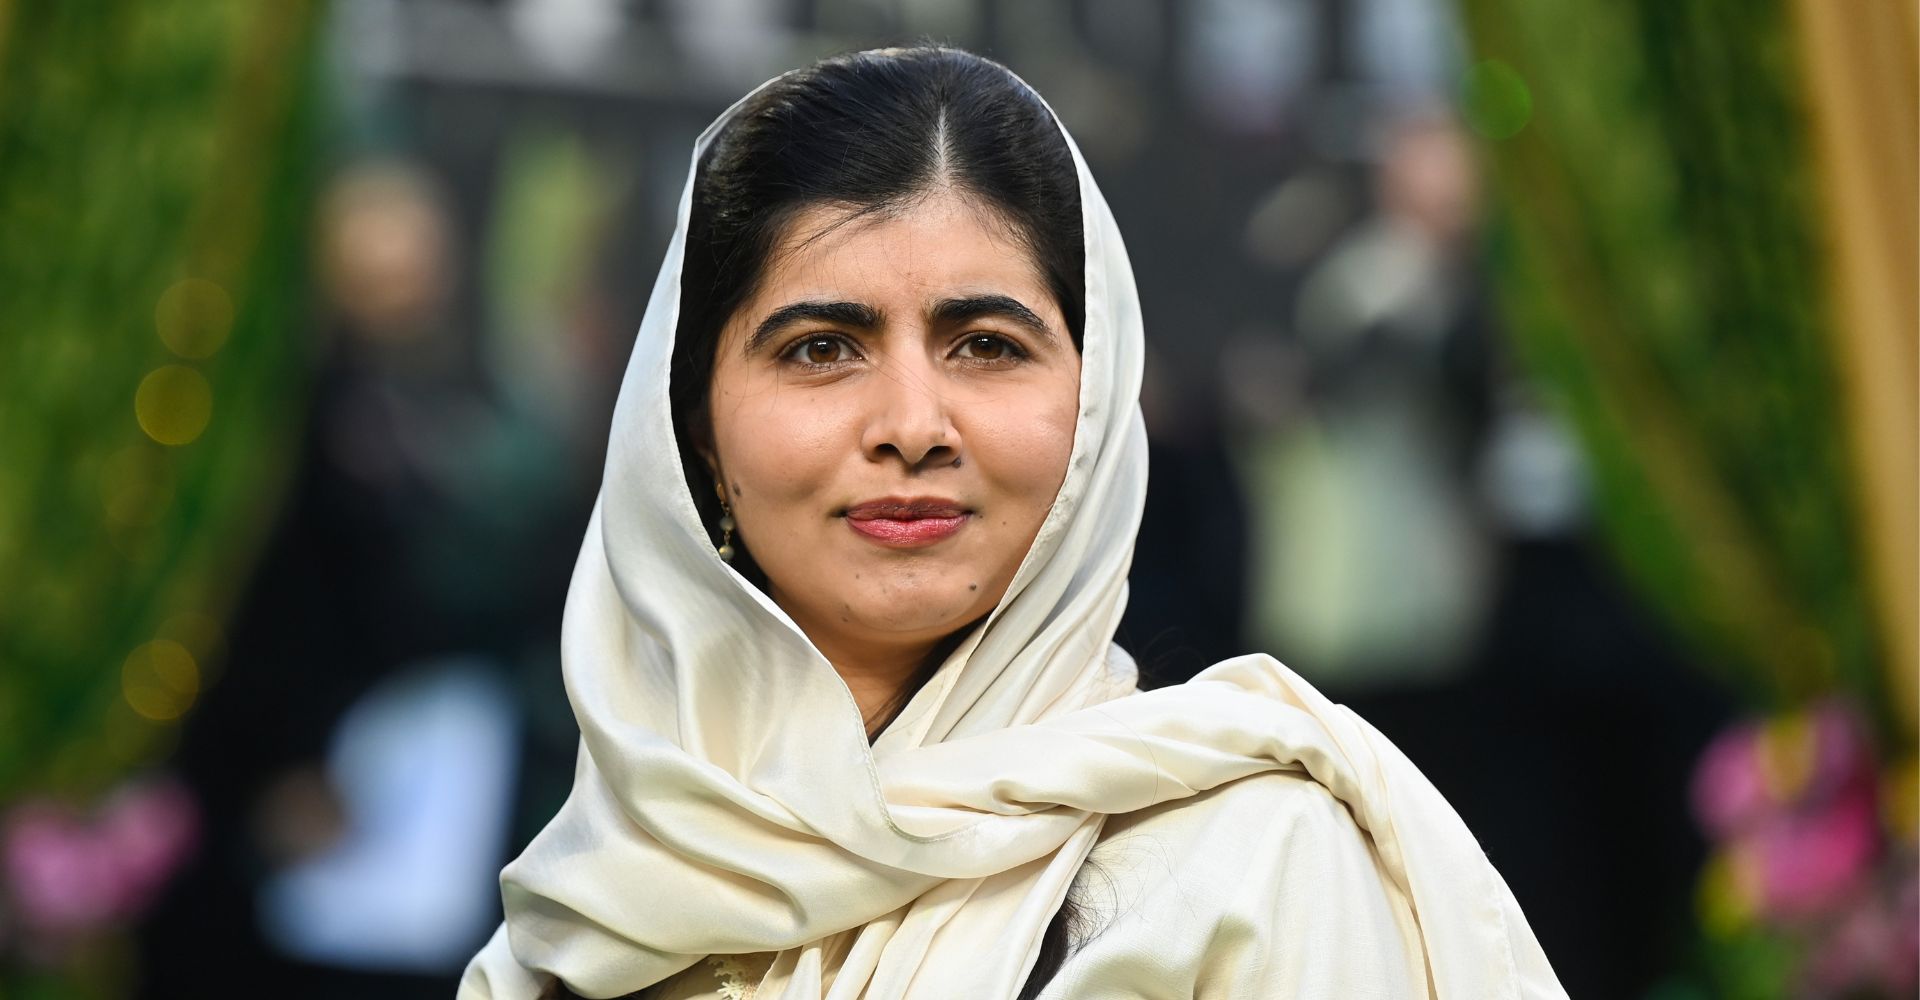 Getty Editorial 13/09 Malala Yousafzai